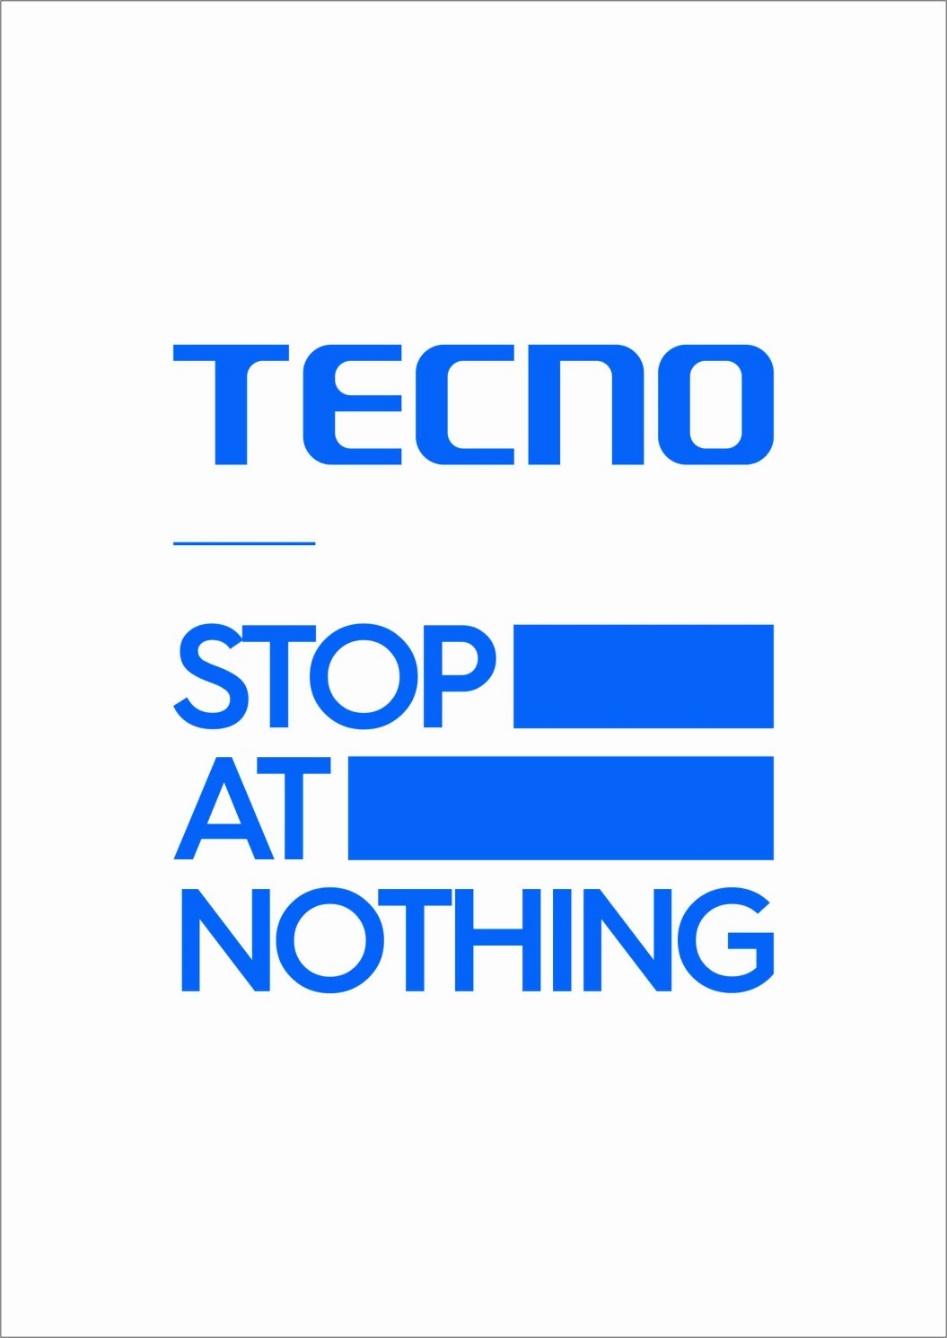 C:\Users\HP\Downloads\TECNO Stop At Nothing slogan lockup.jpg